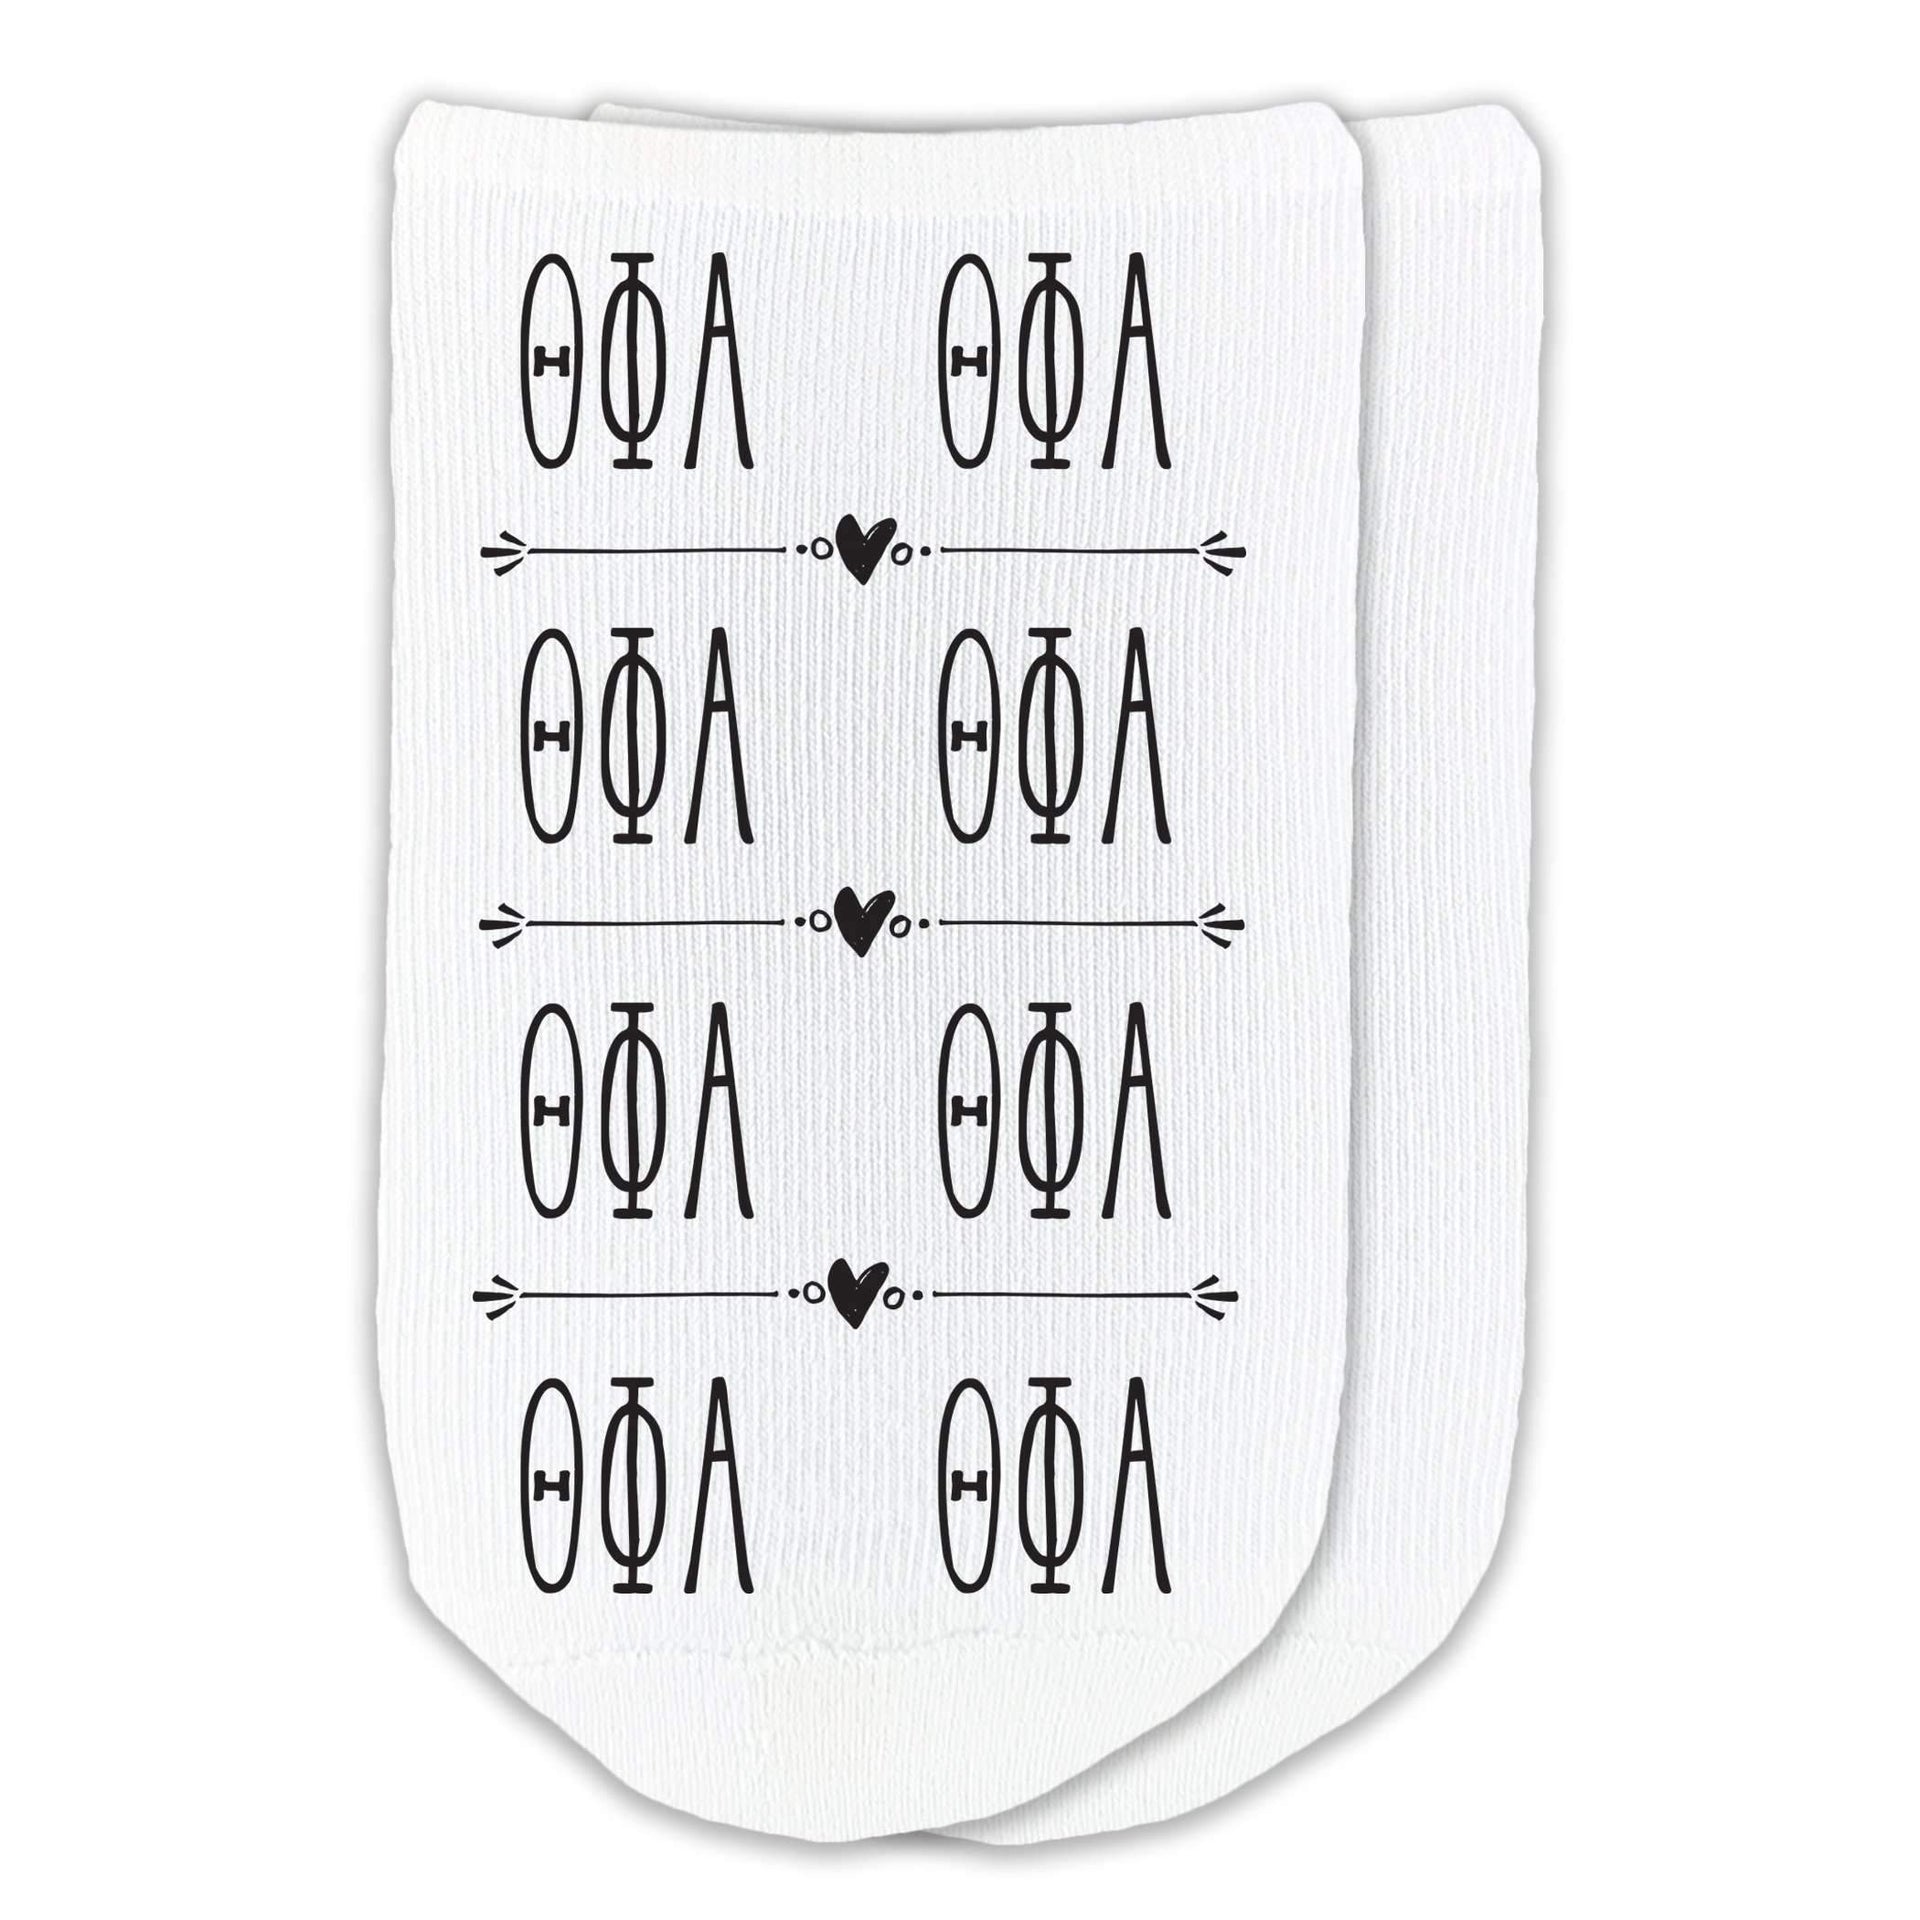 Theta Phi Alpha sorority letters custom printed on white cotton no show socks